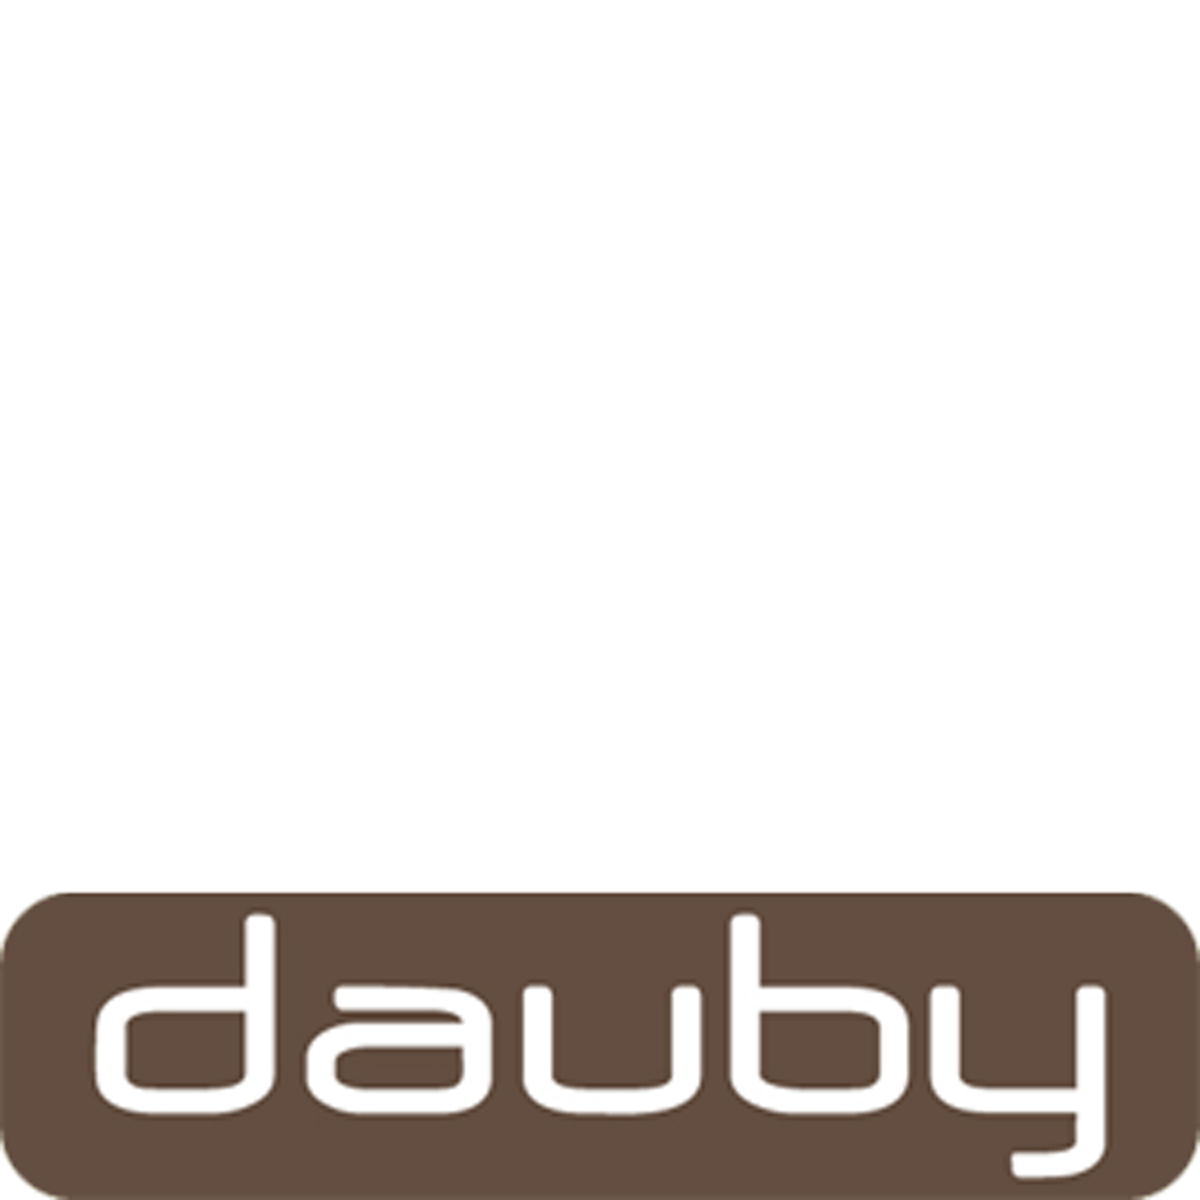 Dauby